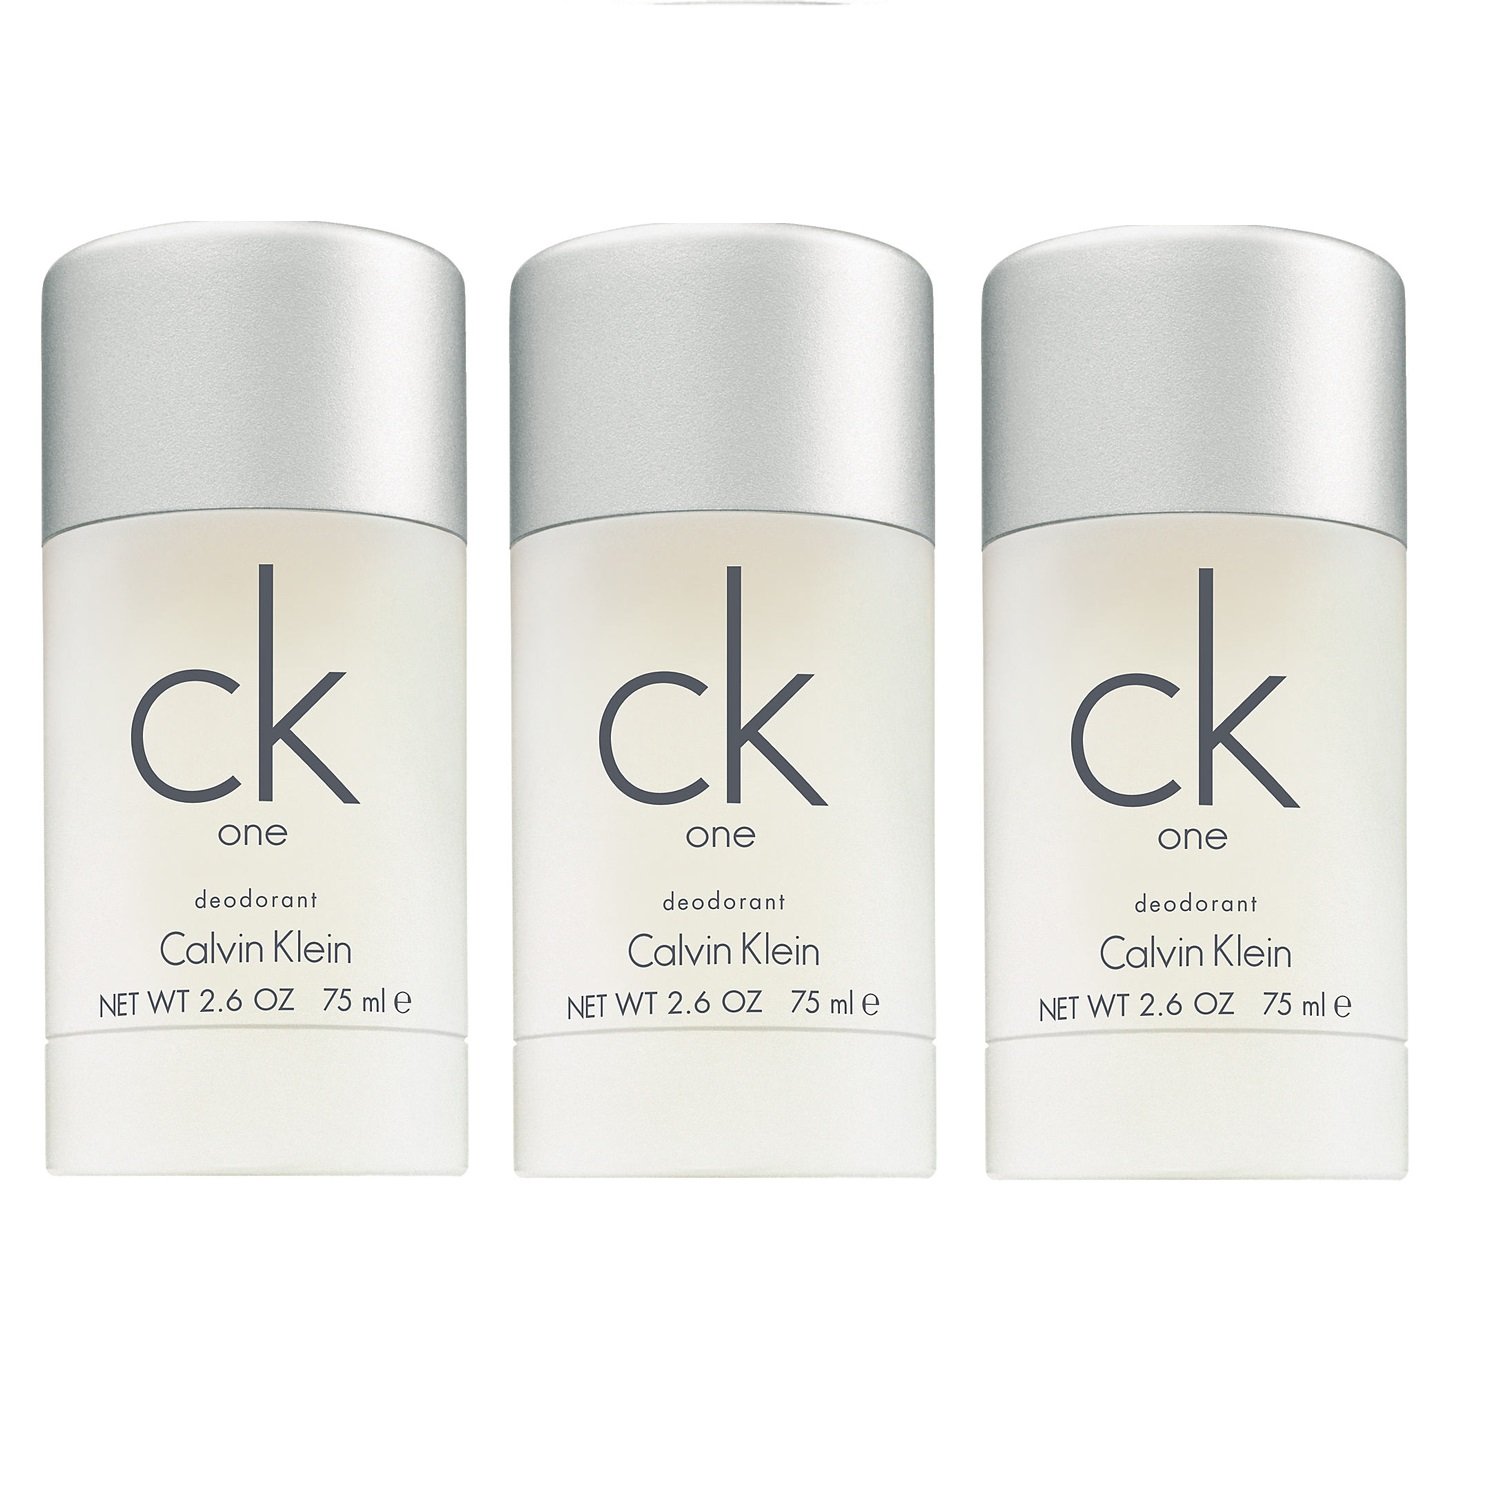 Buy Calvin Klein - 3x CK One Deodorant Stick - Free shipping